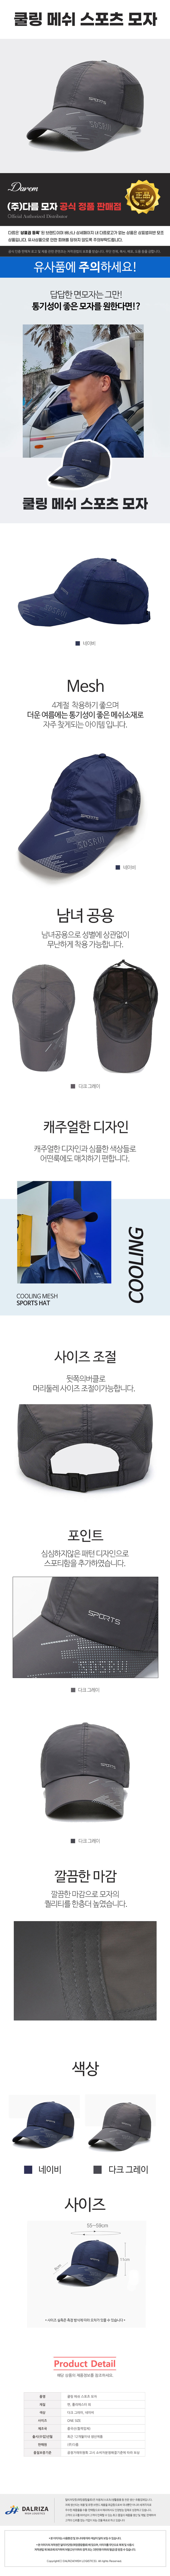 cooling_mesh_sports_hat_detail.jpg